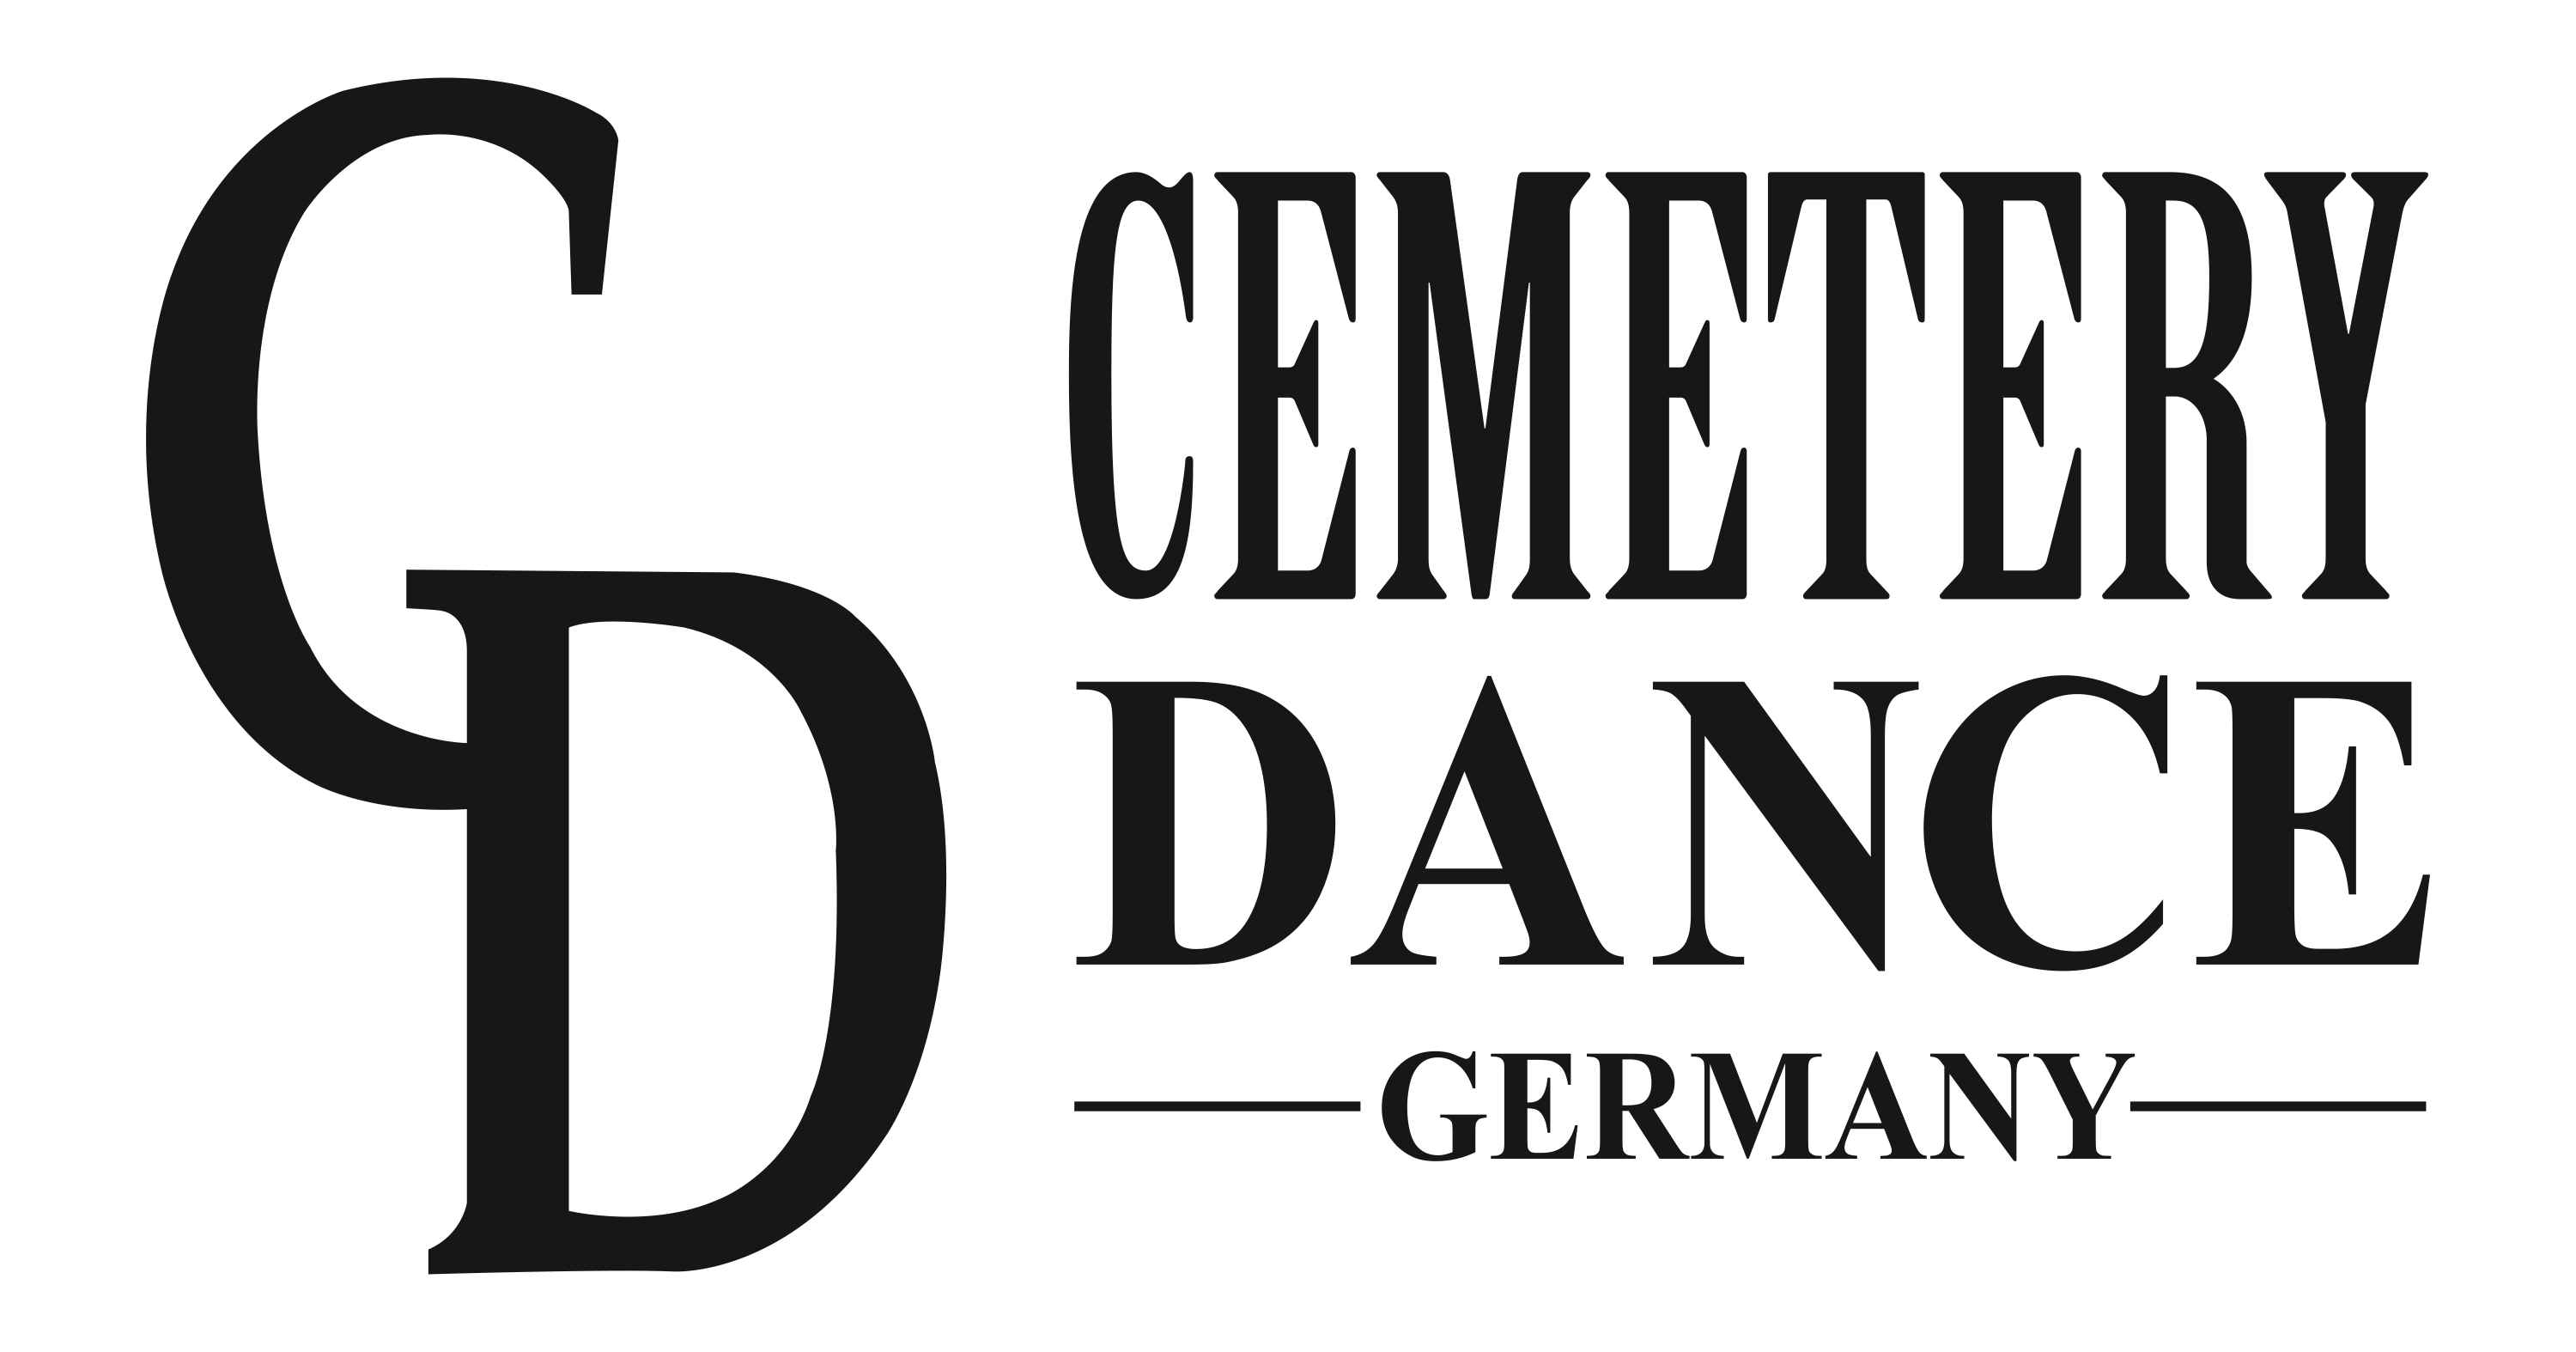 Cemetery Dance Germany